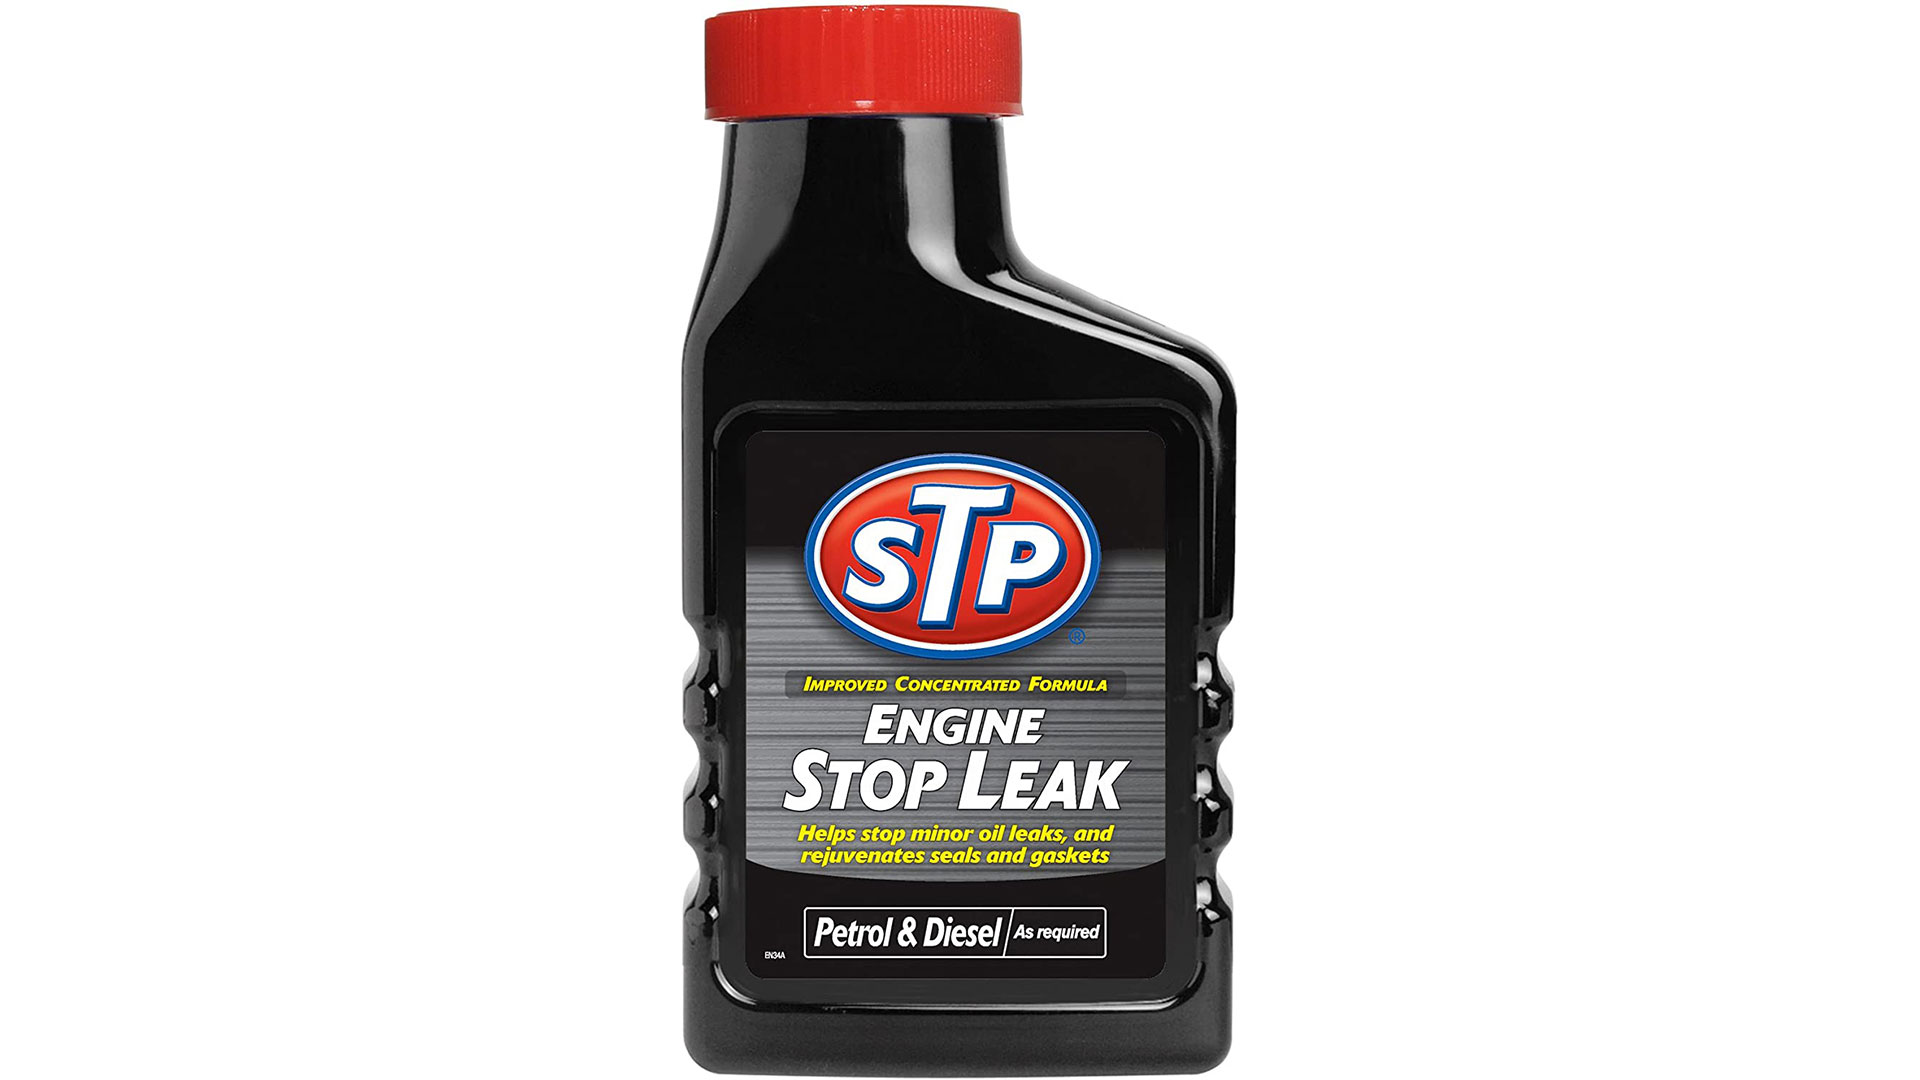 stp engine stop leak